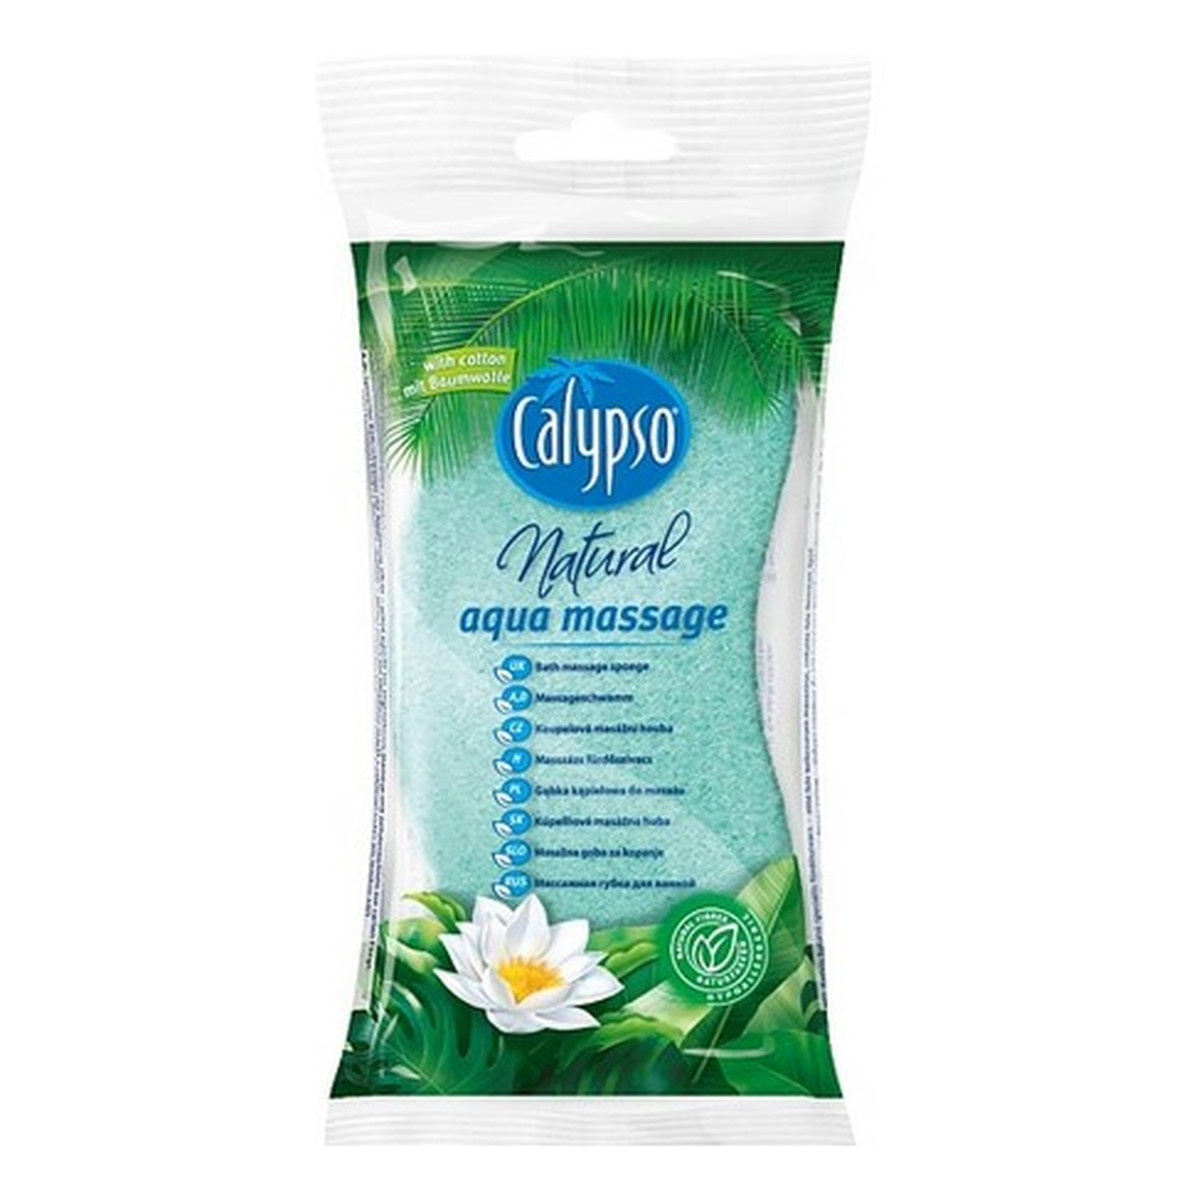 Calypso Natural Aqua Massage Celulozowa Gąbka Do Mycia i Masażu Ciała